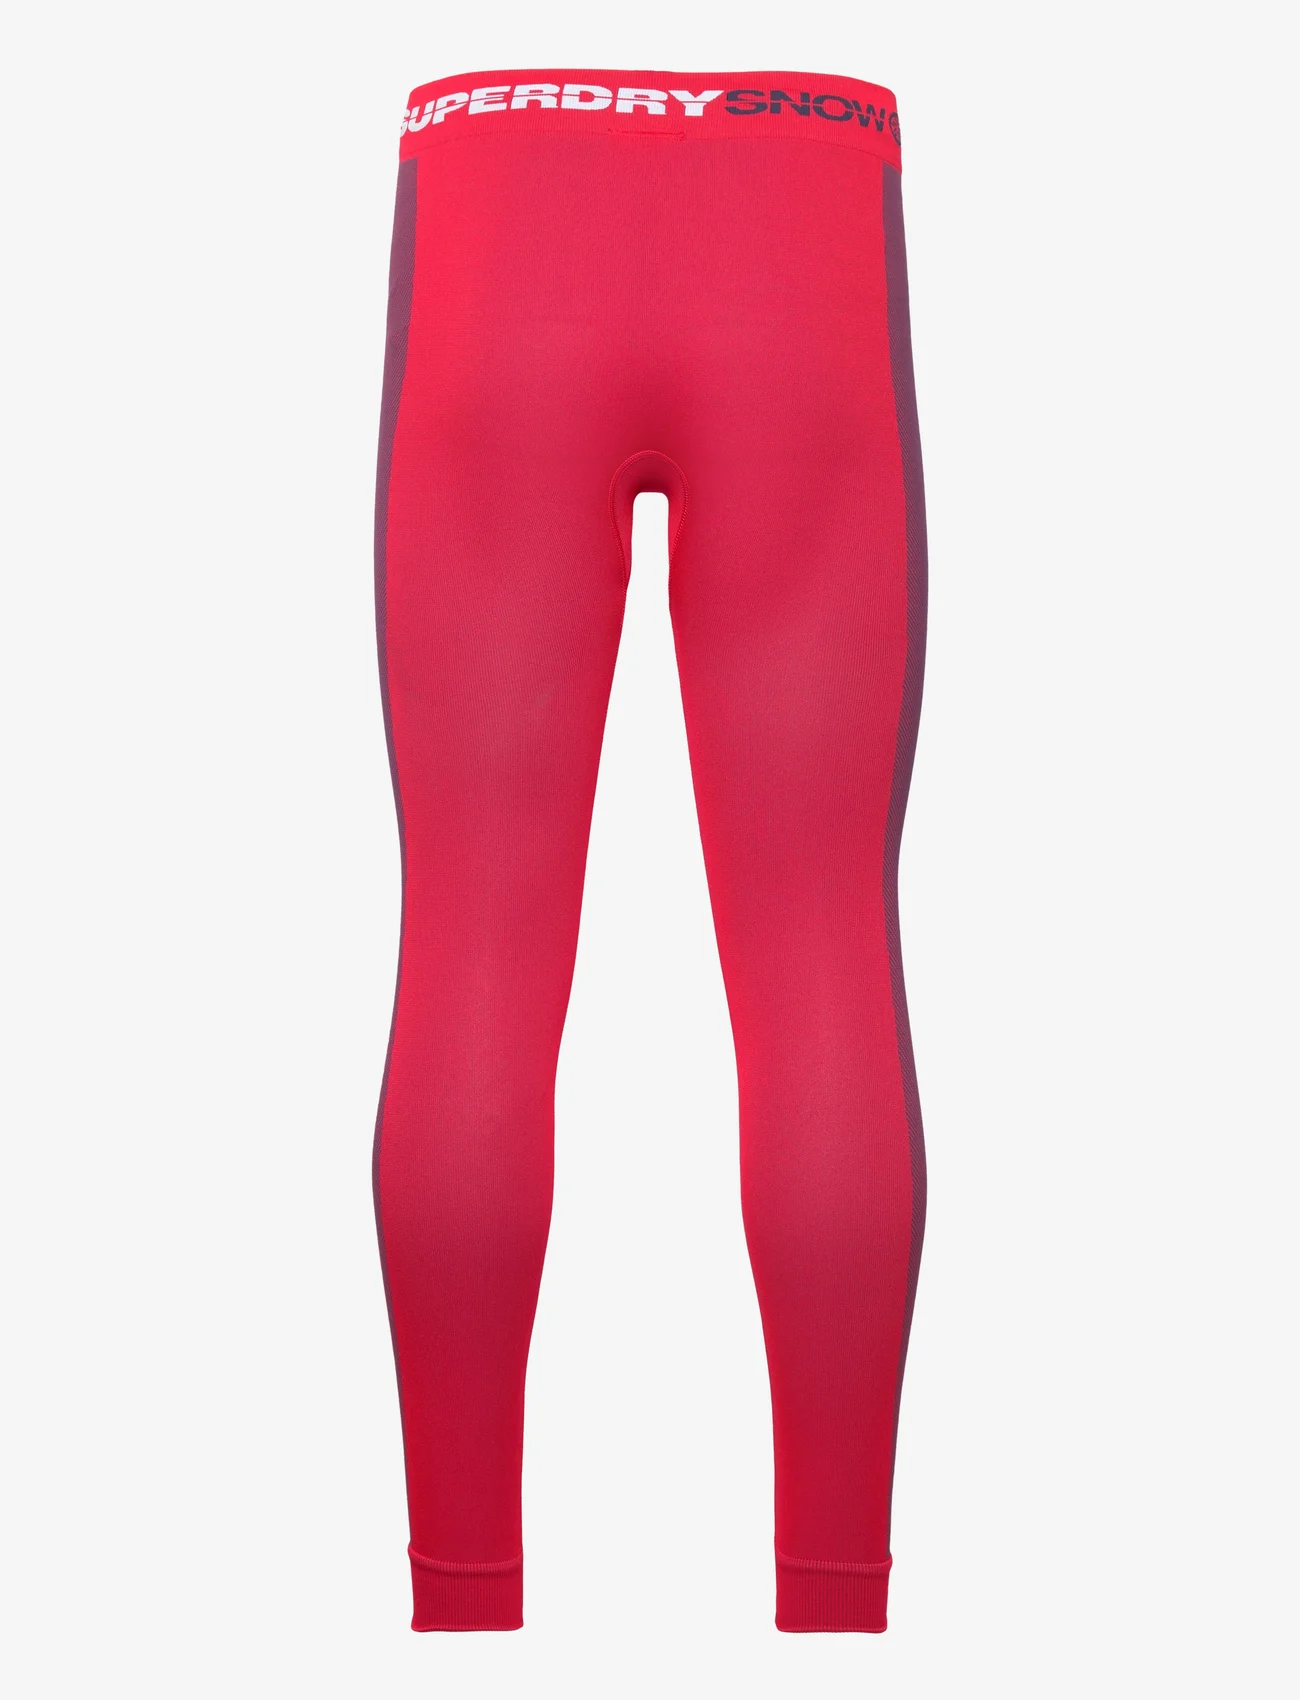 Superdry Sport - SEAMLESS BASELAYER LEGGINGS - spodnie termoaktywne - hike red - 1